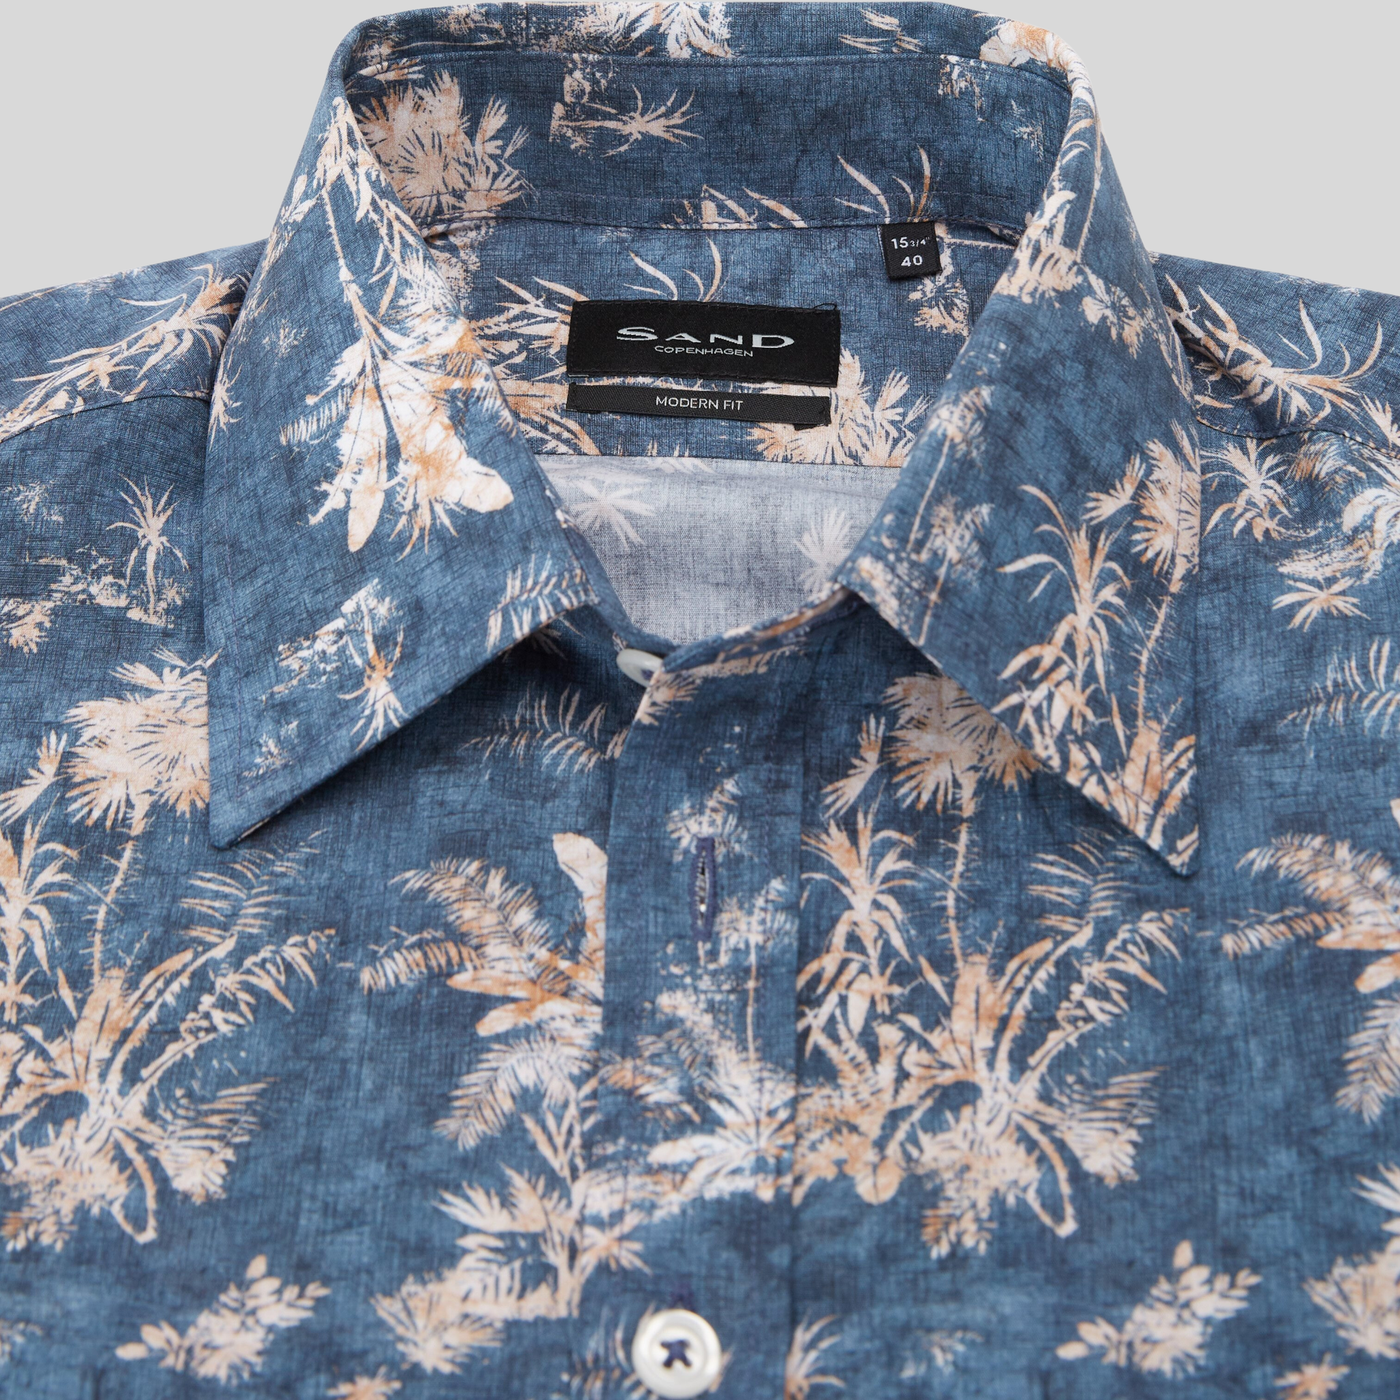 Gotstyle Fashion - Sand Collar Shirts Palm Tree Print Shirt - Teal